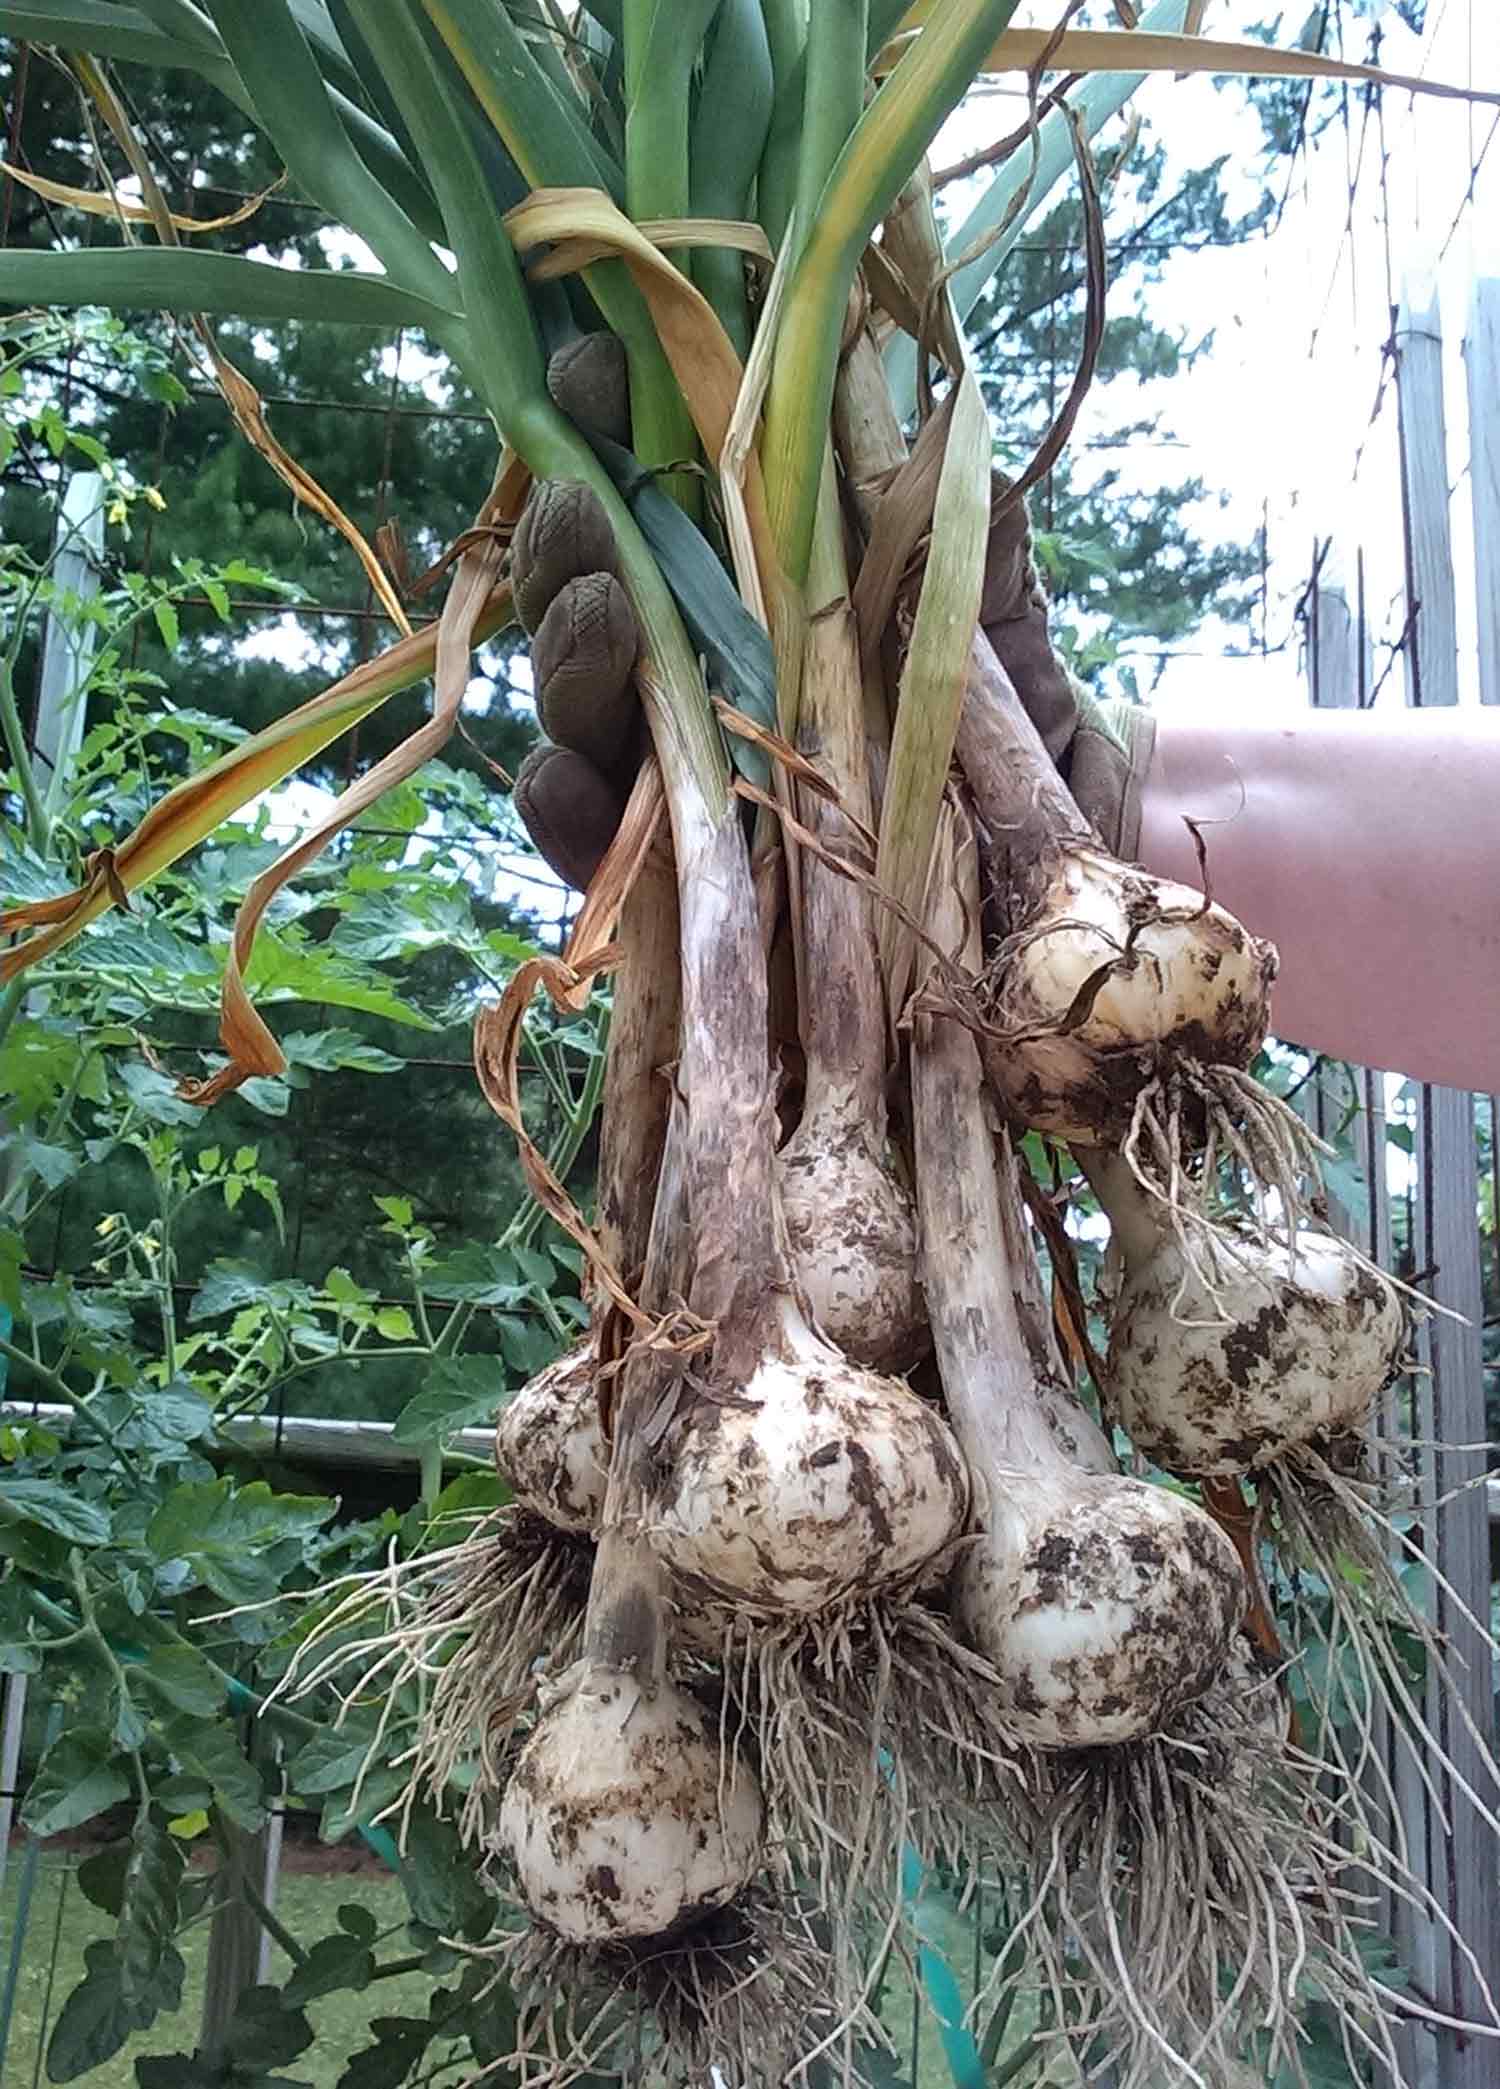 Freshly harvested garlic.